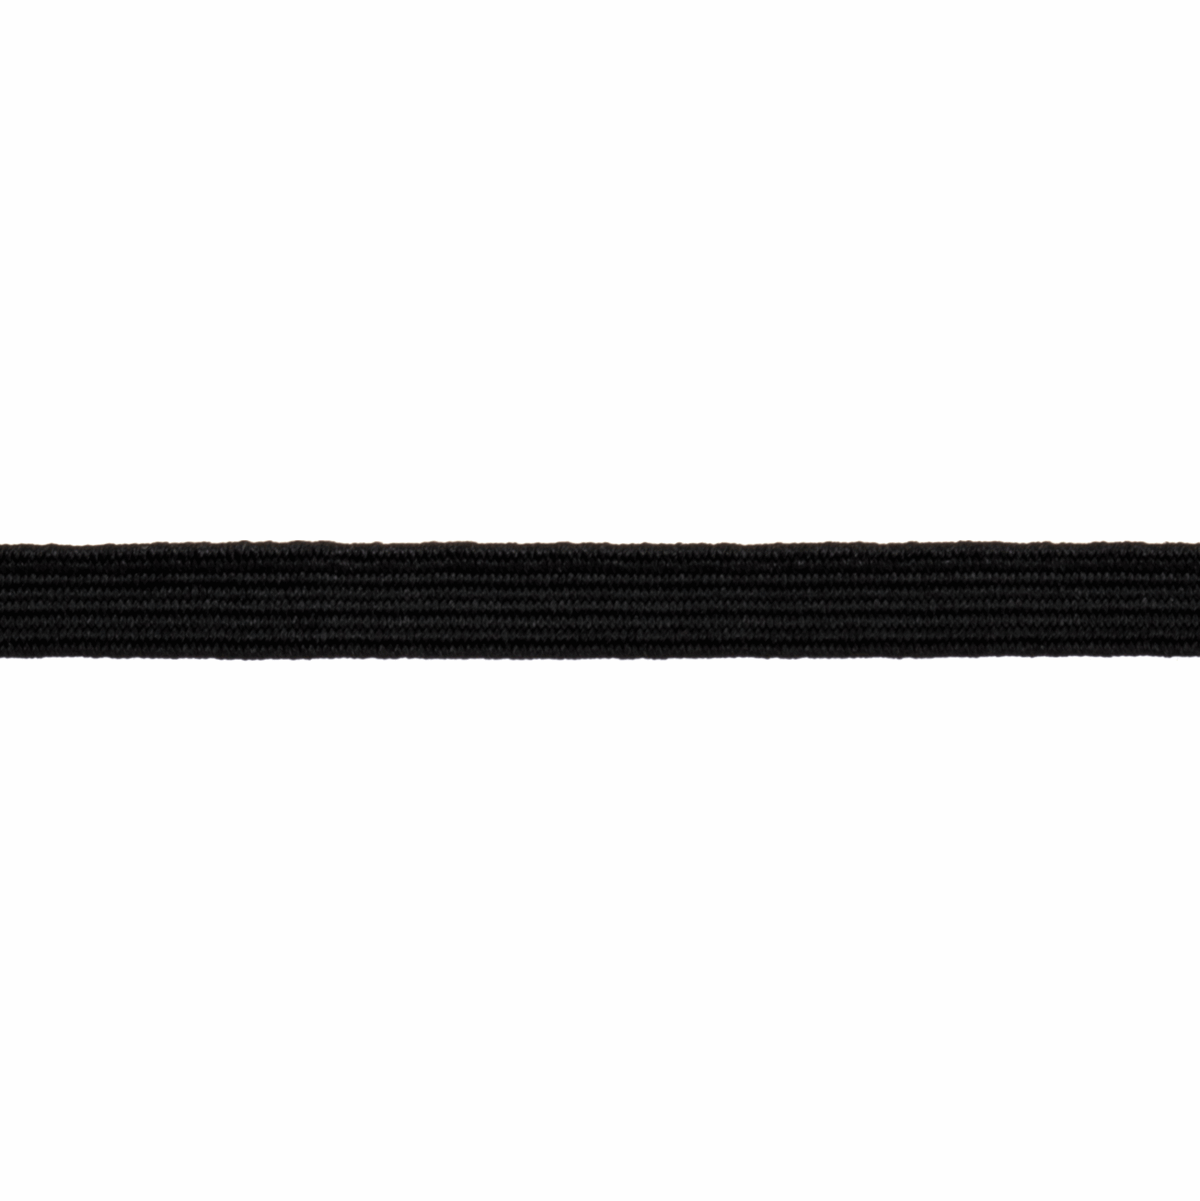 Sewing Gem - Braided Elastic - 9mm Wide - Black or White